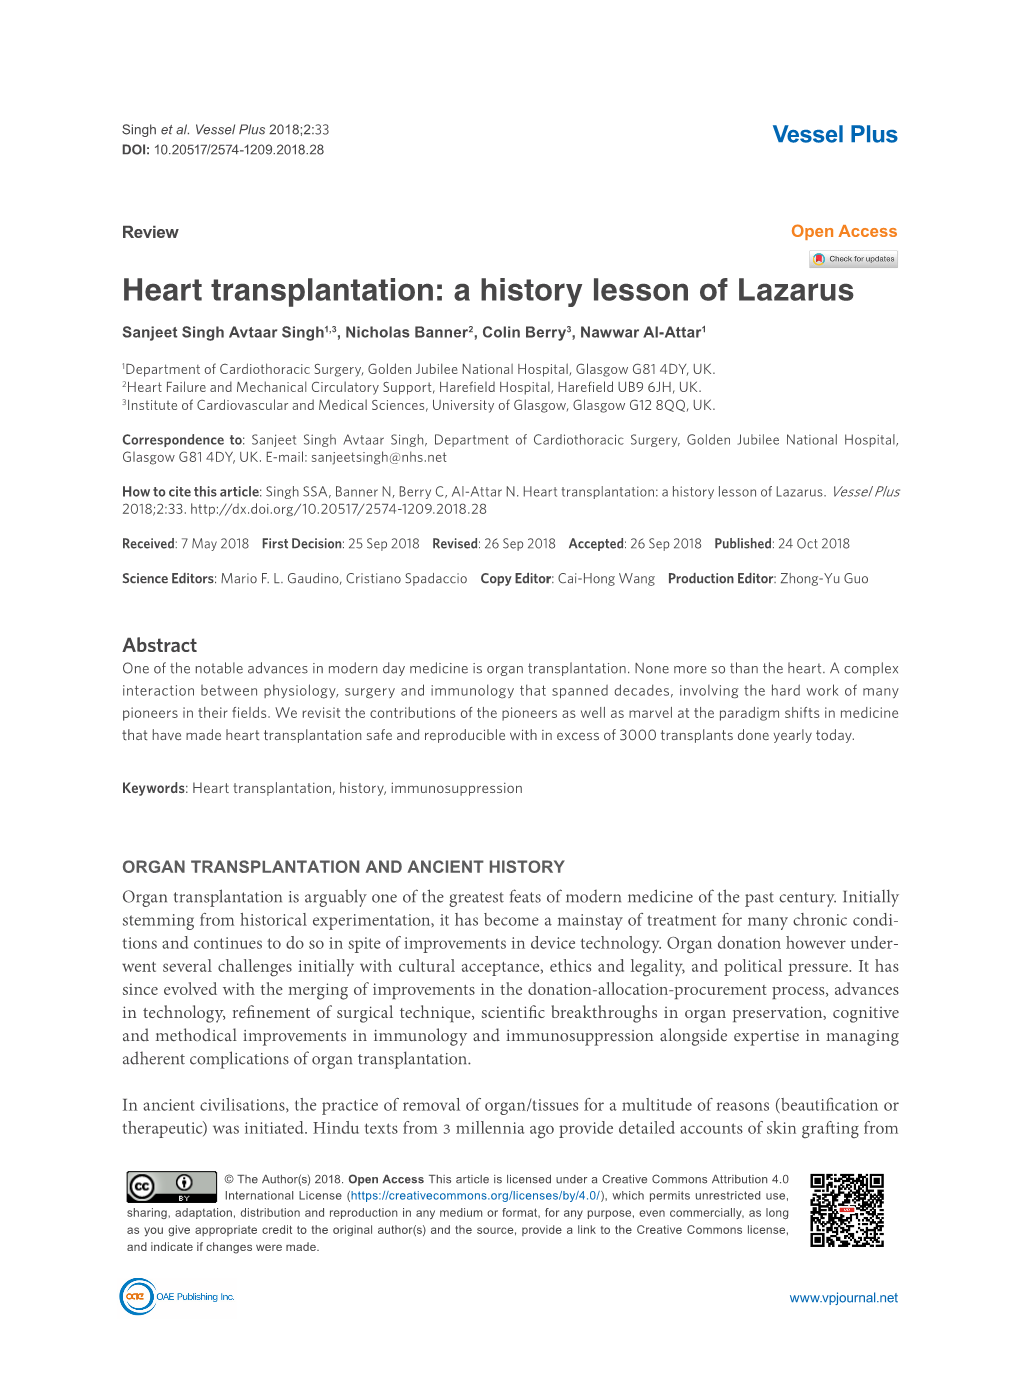 Heart Transplantation: a History Lesson of Lazarus